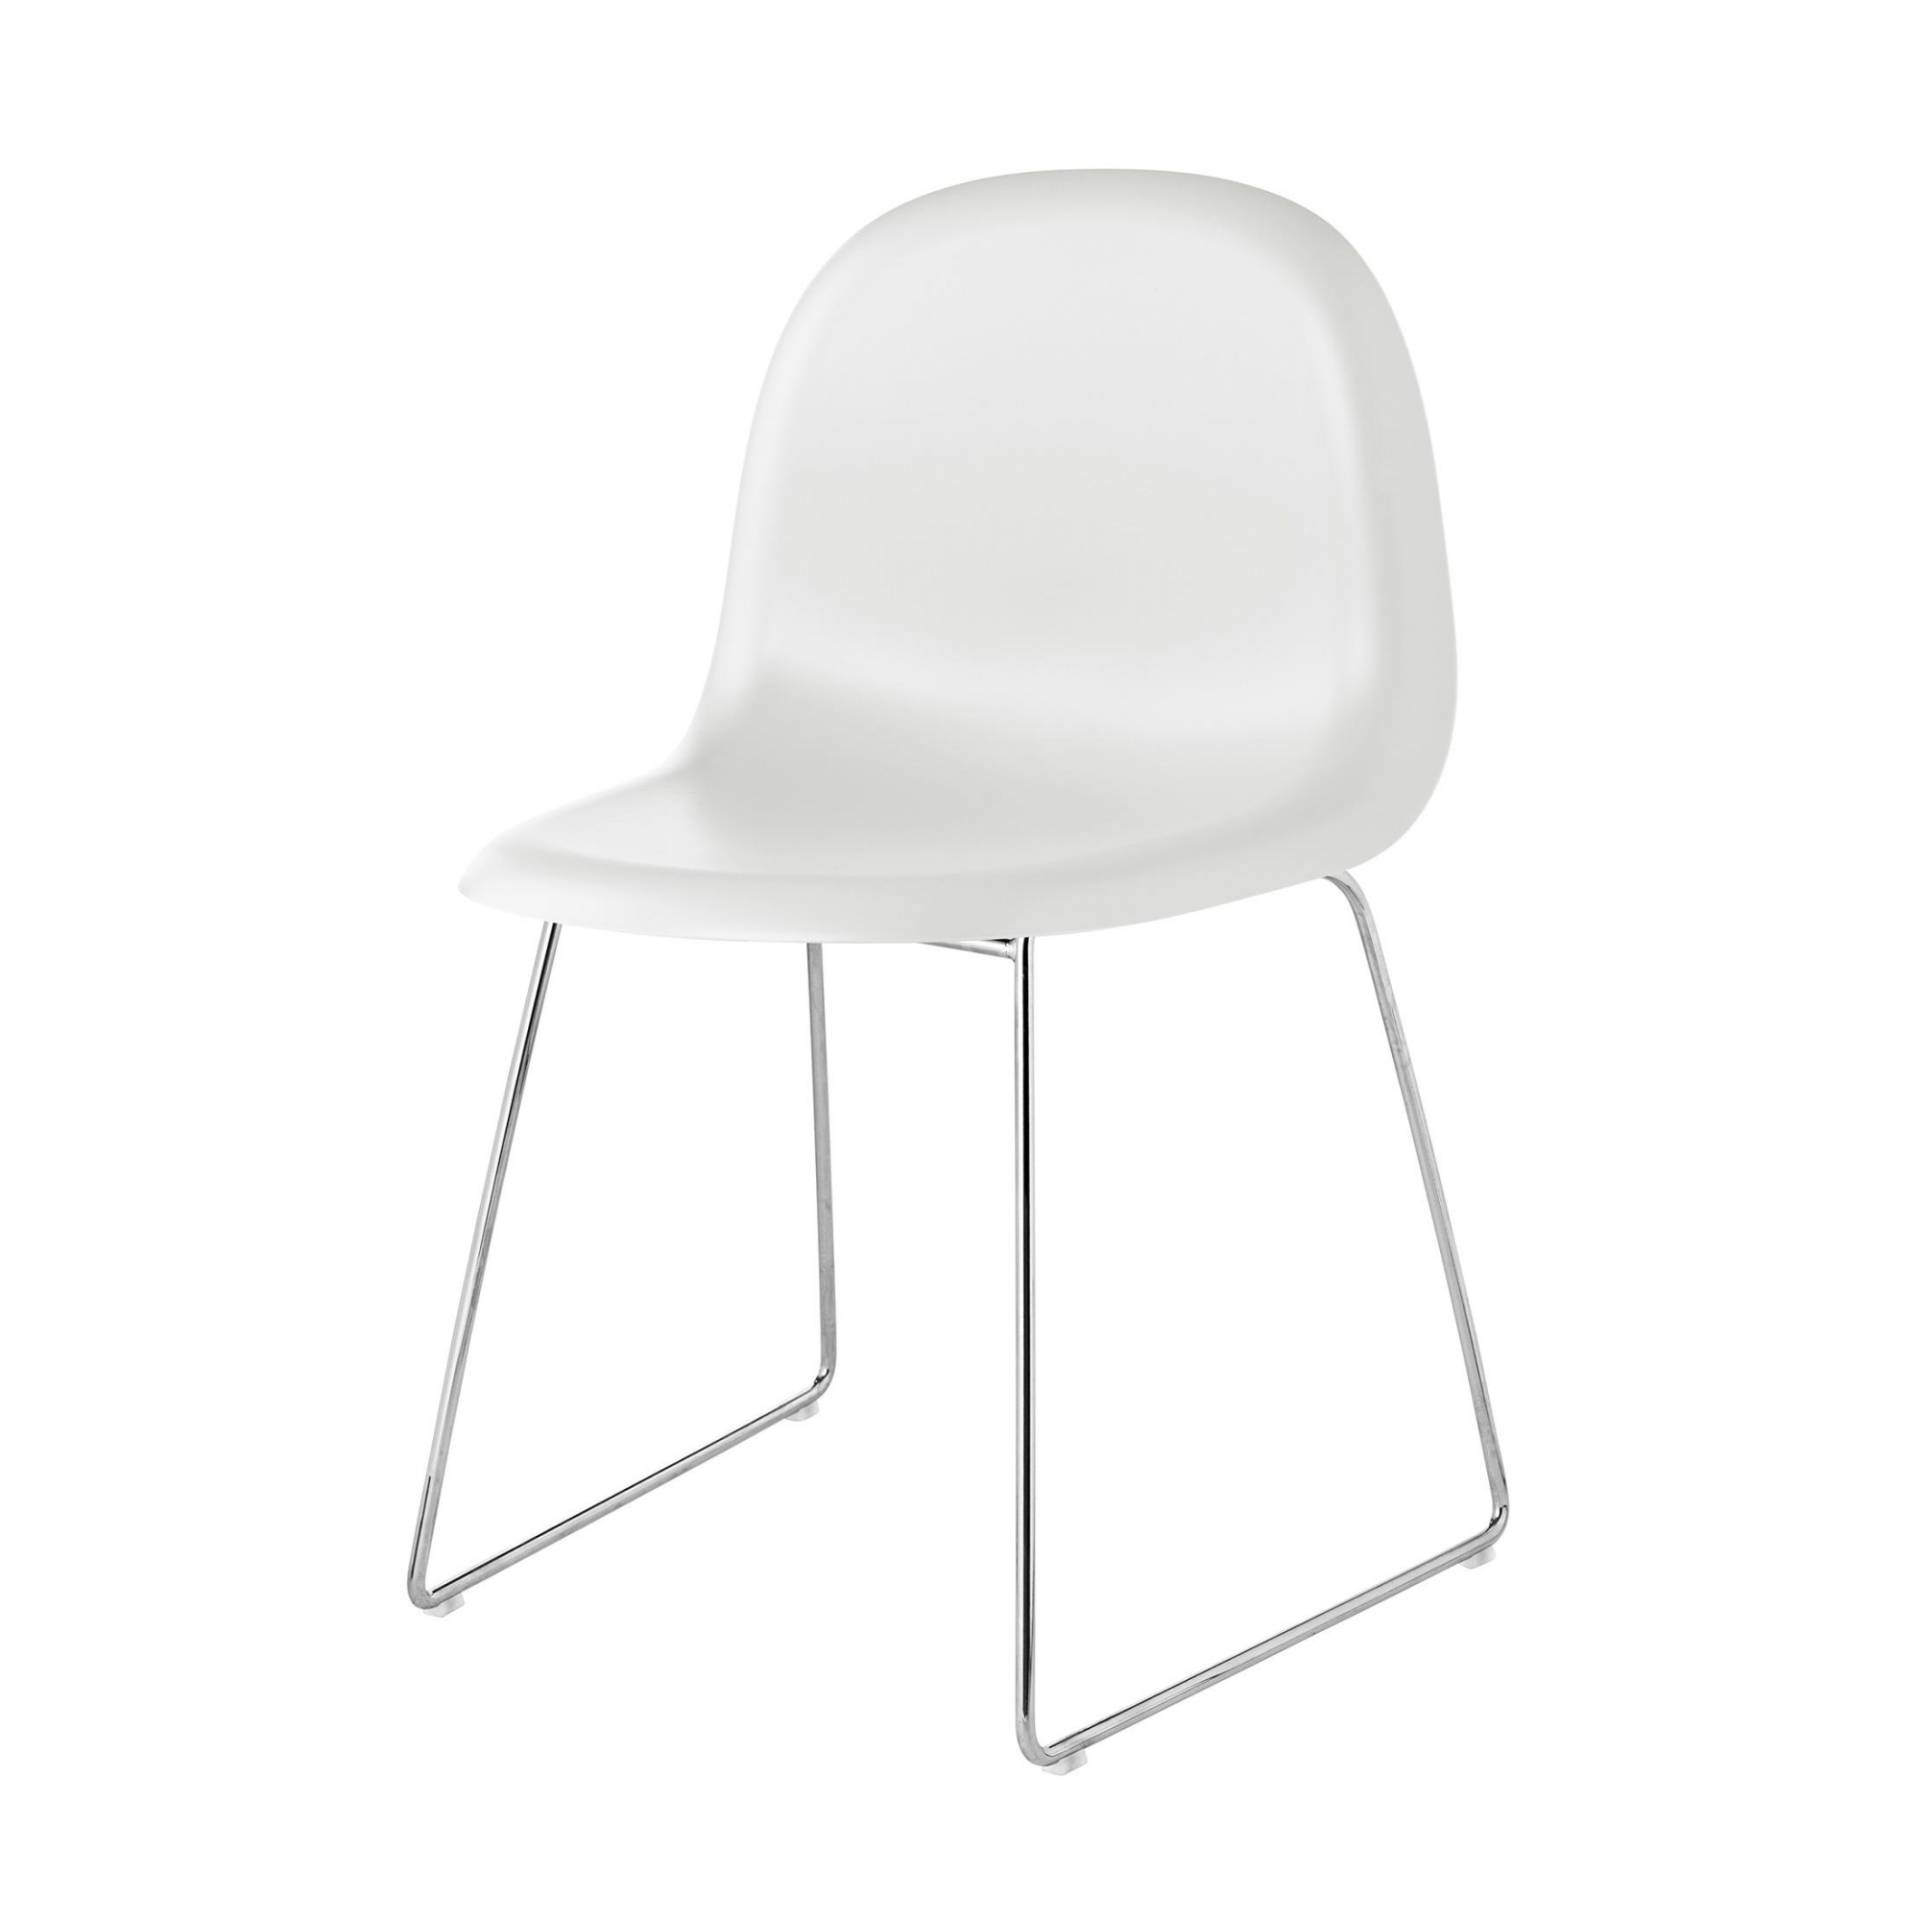 Gubi - 3D Dining Chair Kufengestell Chrom - soft weiß/Sitzfläche HiRek Kunststoff/BxHxT 52x82x53,5cm/Gestell Chrom/Kunststoffgleiter von Gubi